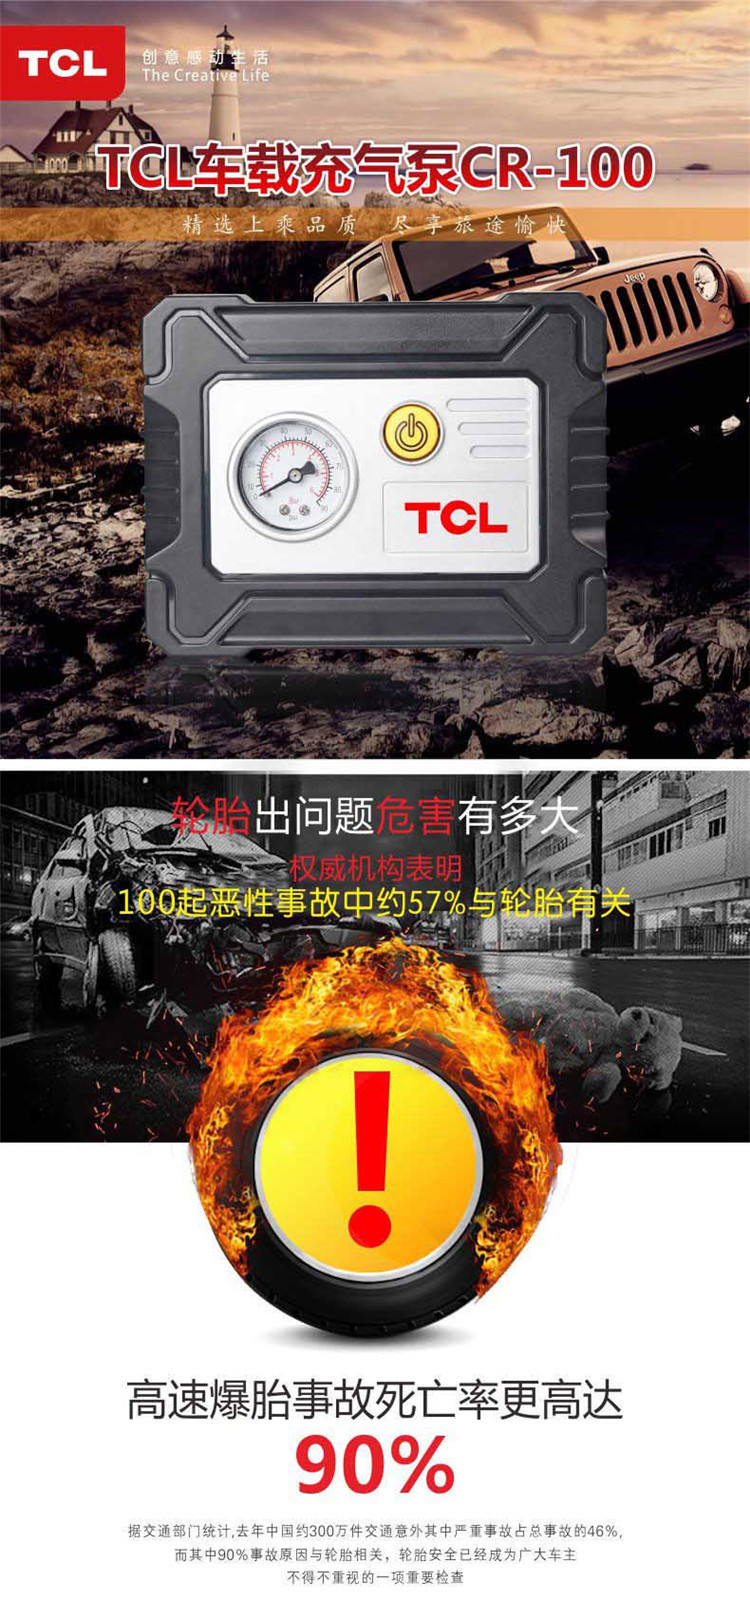 TCL 车载充气泵 CR-100（仅限焦作地区积分兑换）